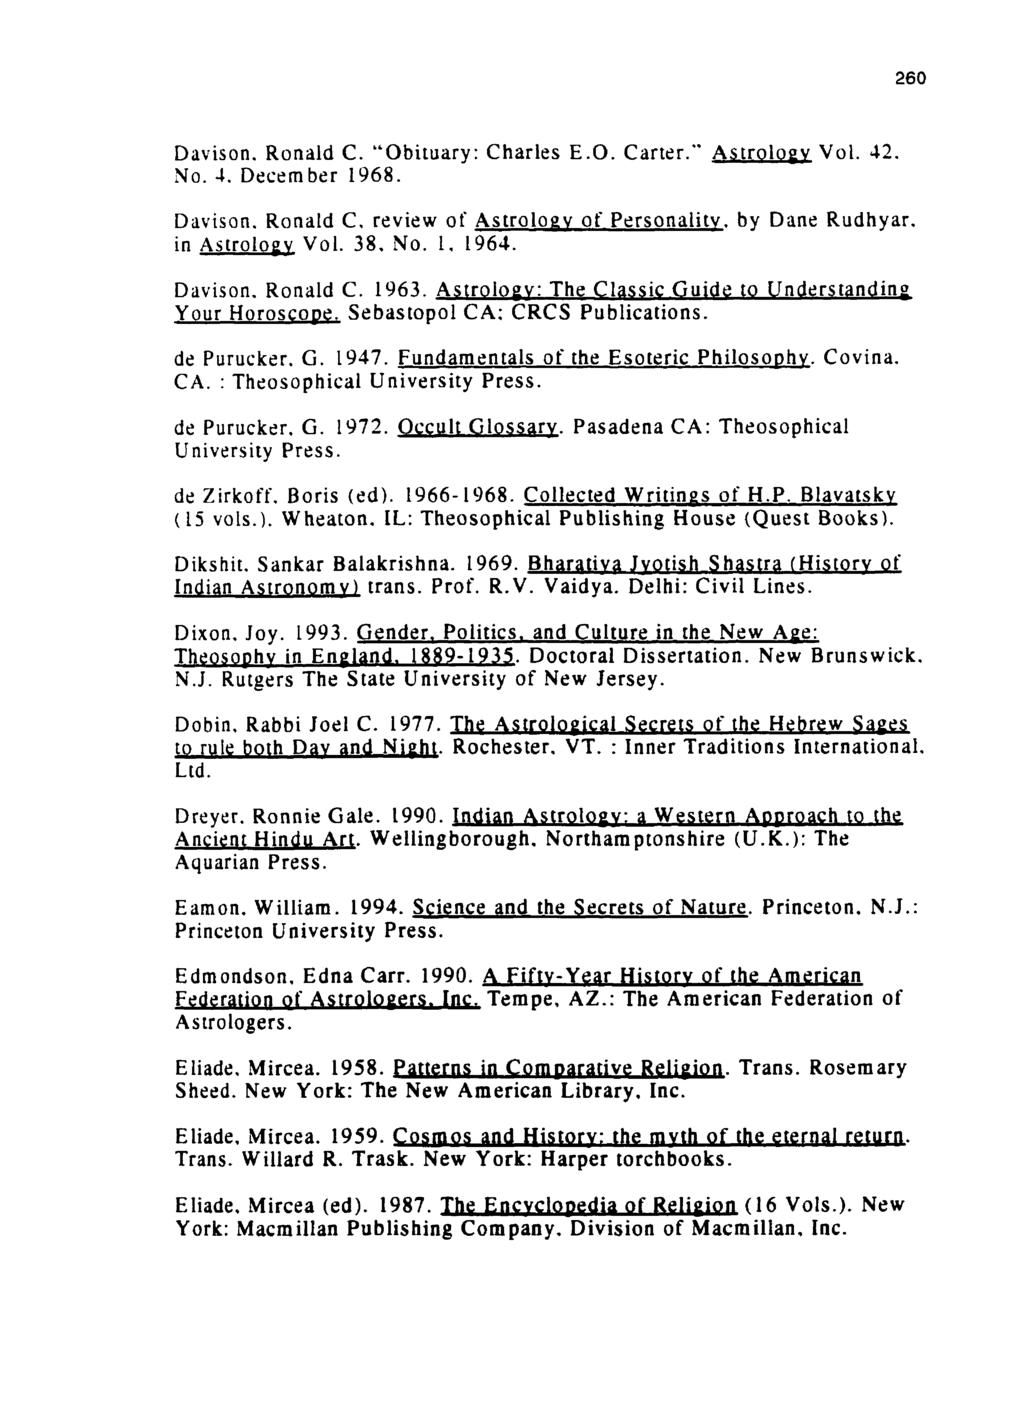 Davison. Ronald C. "Obituary: Charles E.O. Carter." Astroloe~ Vol. 42. No. 4. Decem ber 1968. Davison. Ronald C. rcvicw of Astroloev of Personalitv. by Dane Rudhyar. in Astroloey Vol. 38. No. 1. 1964.